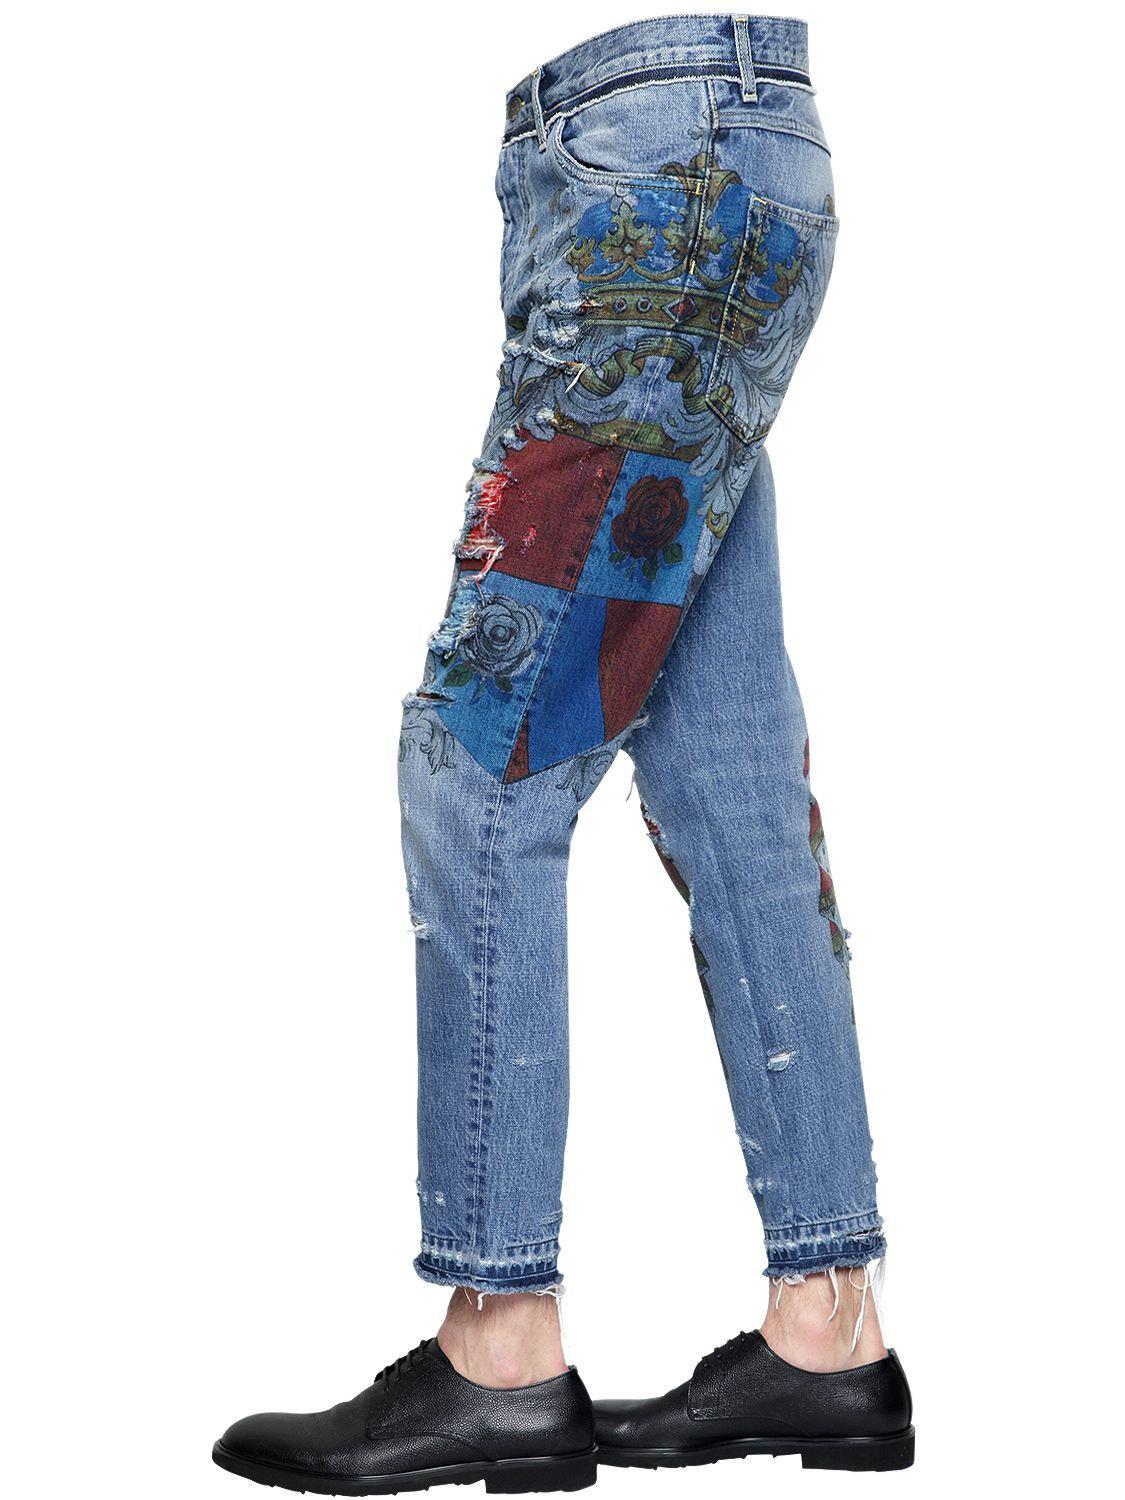 Lyst - Dolce & Gabbana 16.5cm Printed & Destroyed Denim Jeans in Blue ...